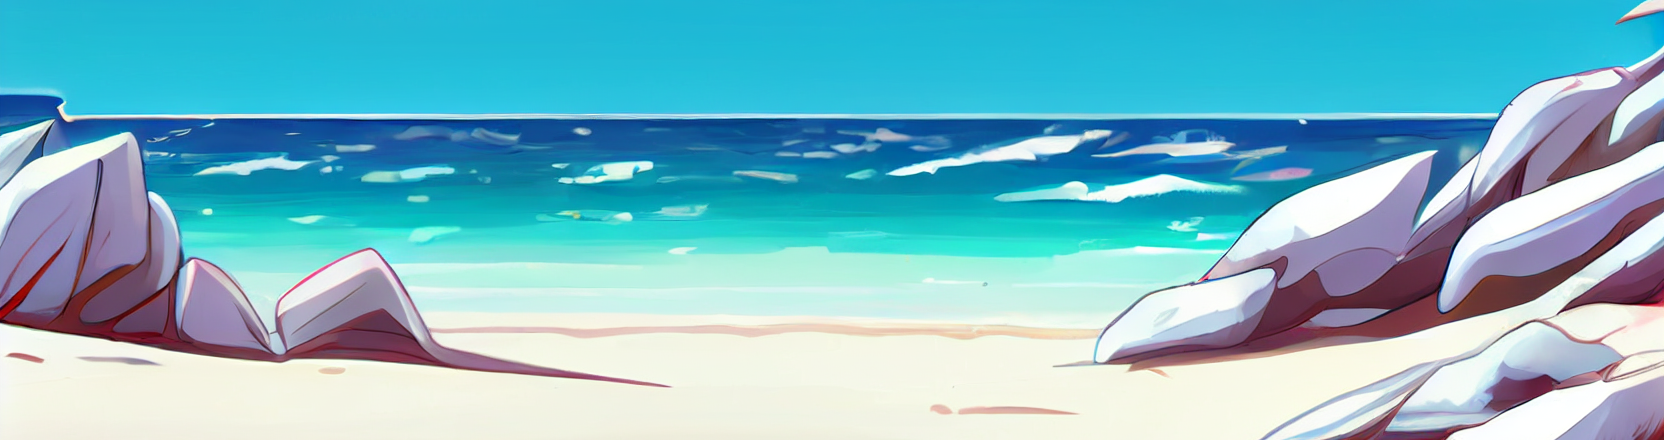 Mobile Backgrounds: Seaside